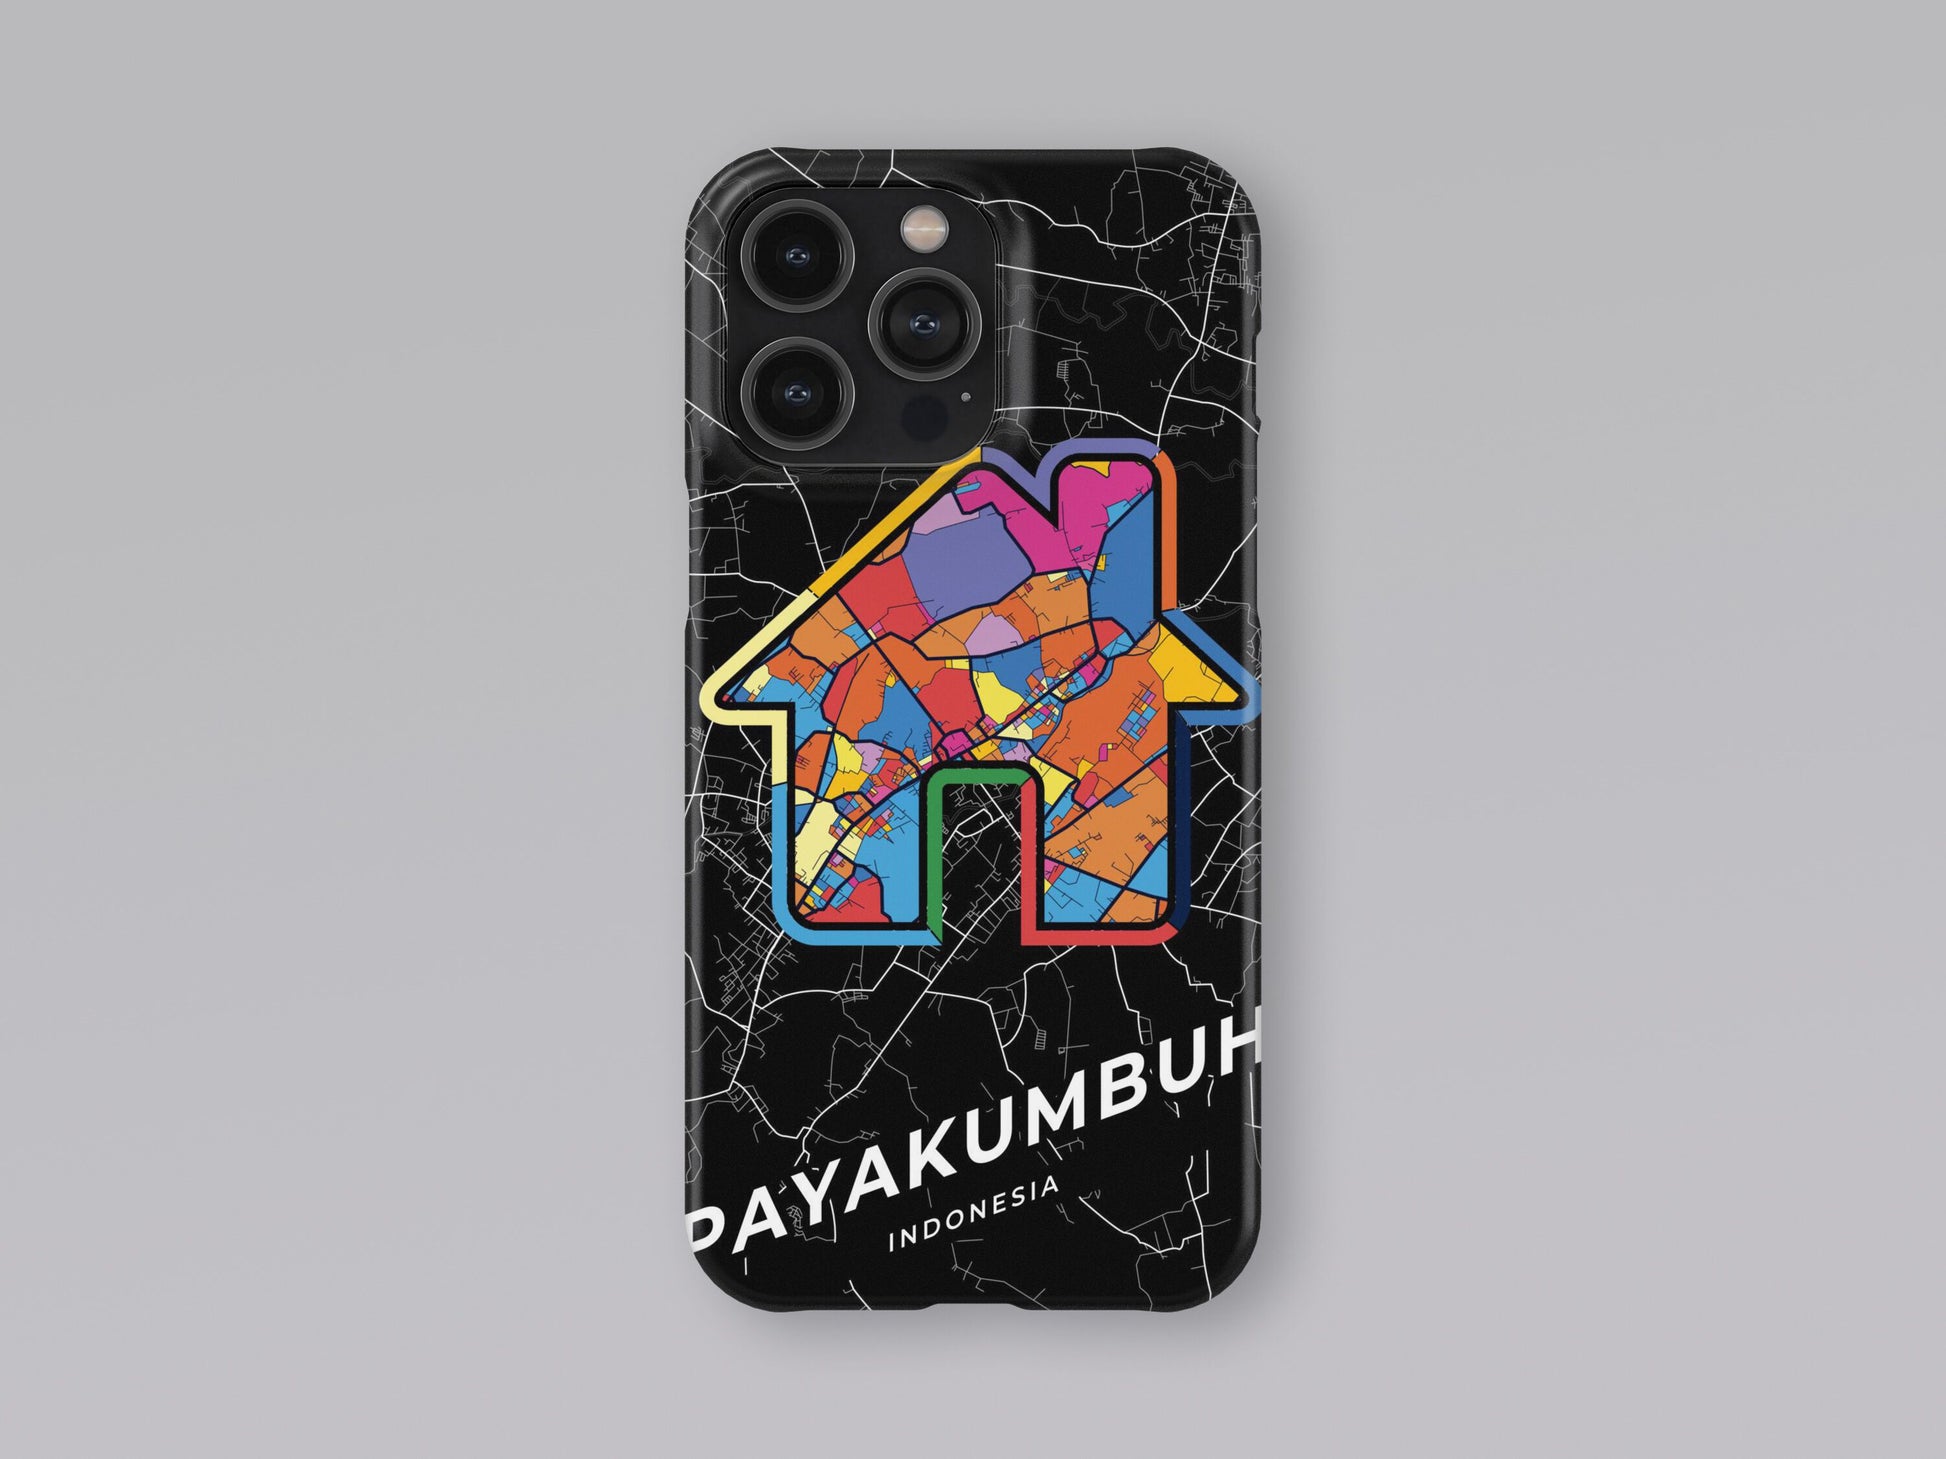 Payakumbuh Indonesia slim phone case with colorful icon 3